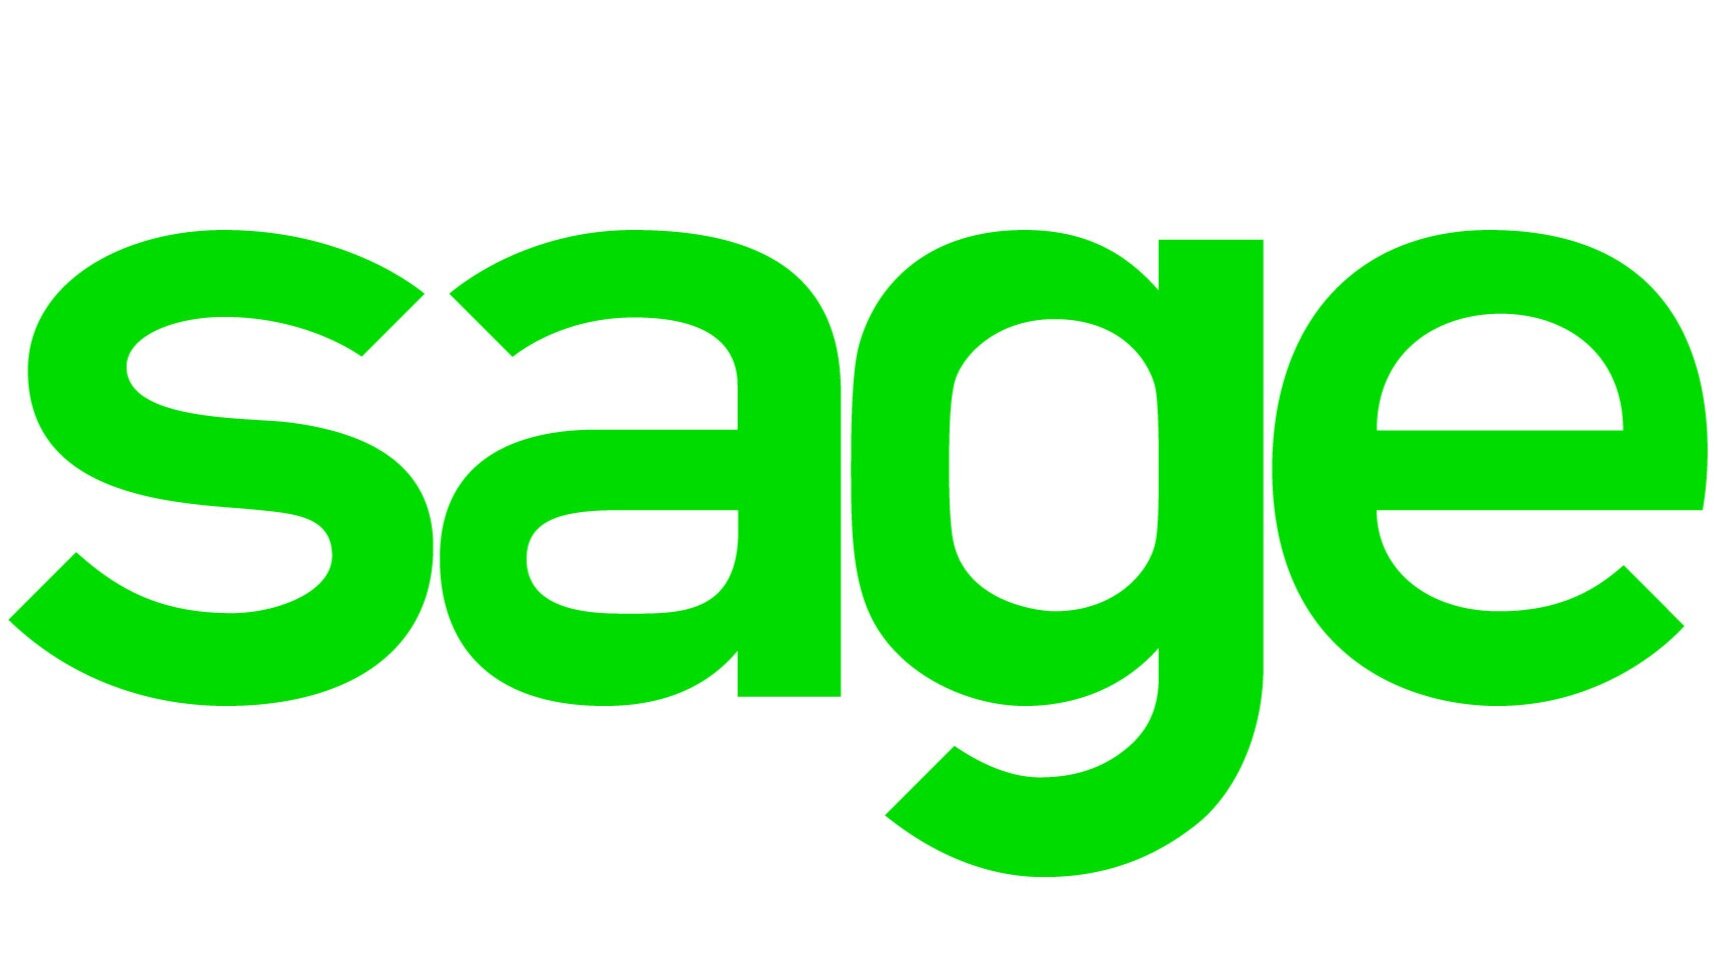 Sage_logo_bright_green.jpg